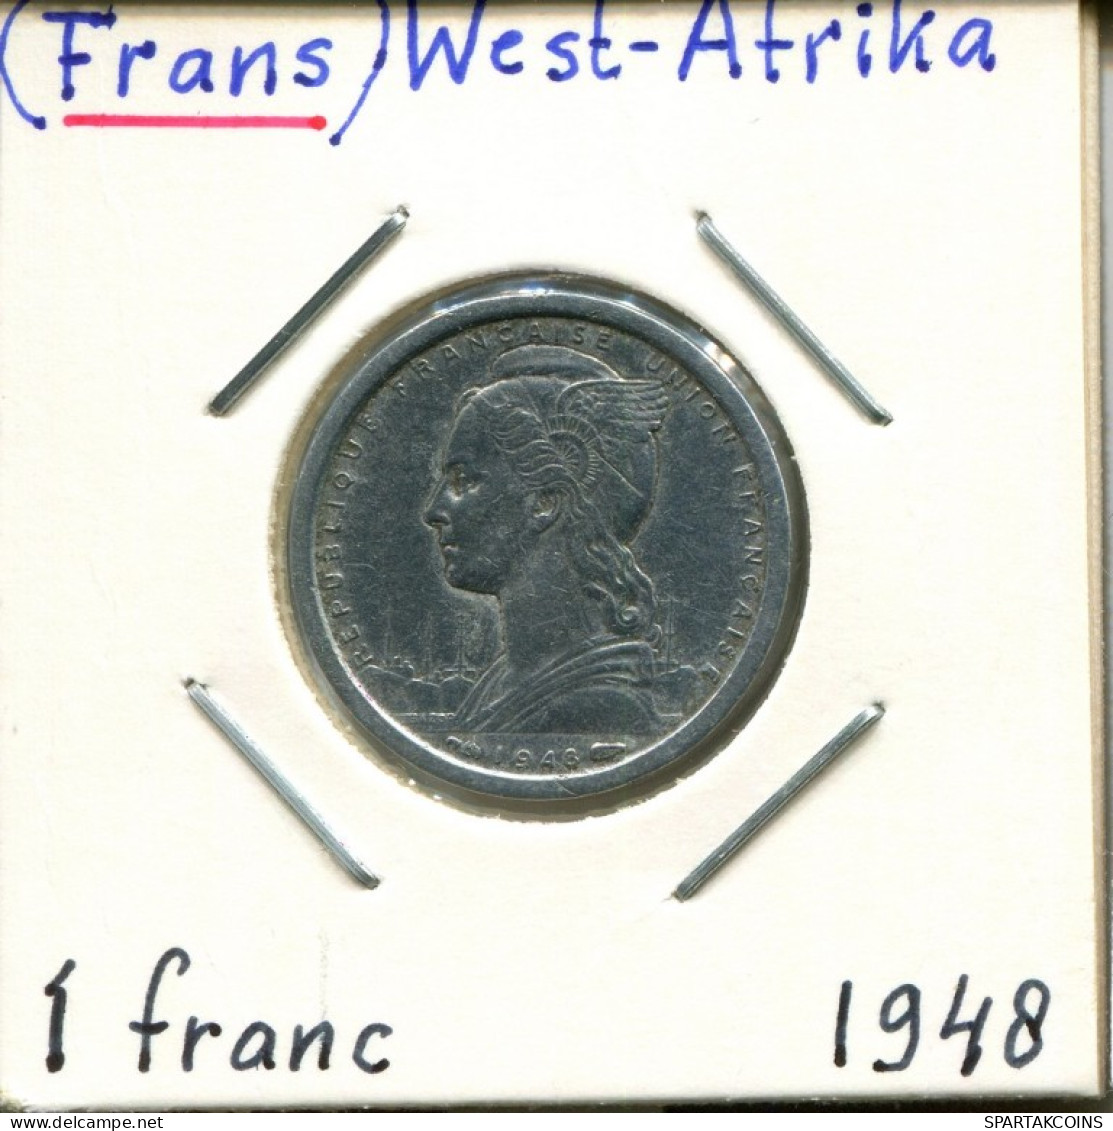 1 FRANC 1948 Französisch WESTERN AFRICAN STATES Koloniale Münze #AM518.D.A - Afrique Occidentale Française